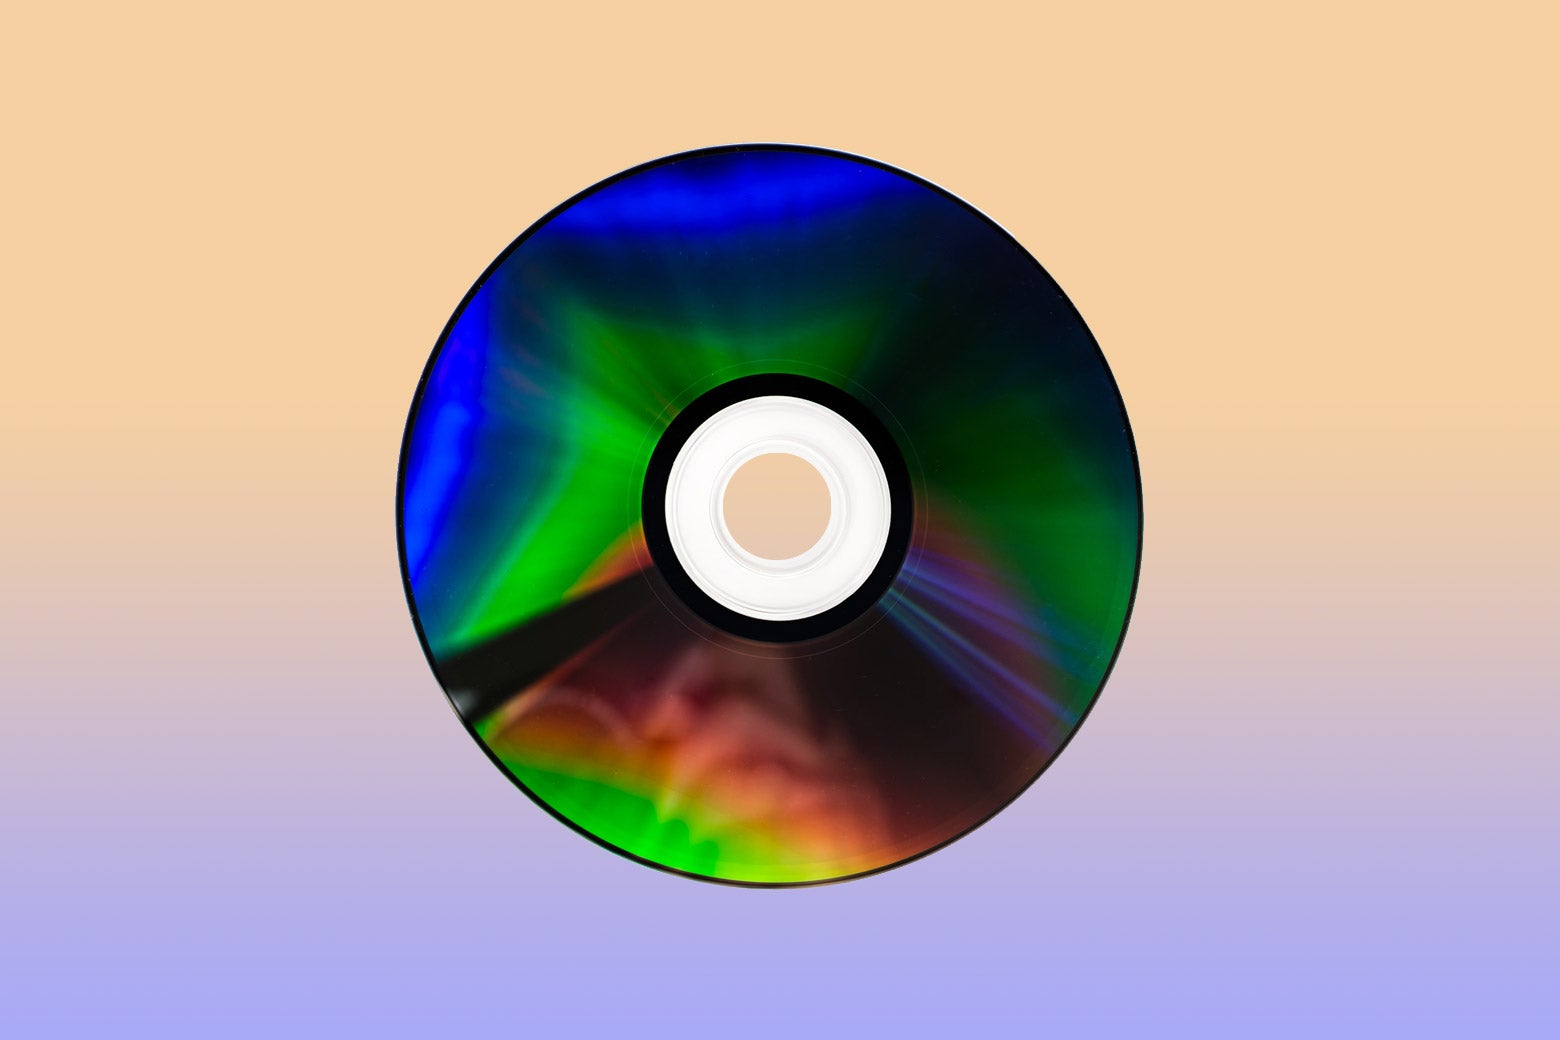 A CD-ROM w/ rainbow colors.